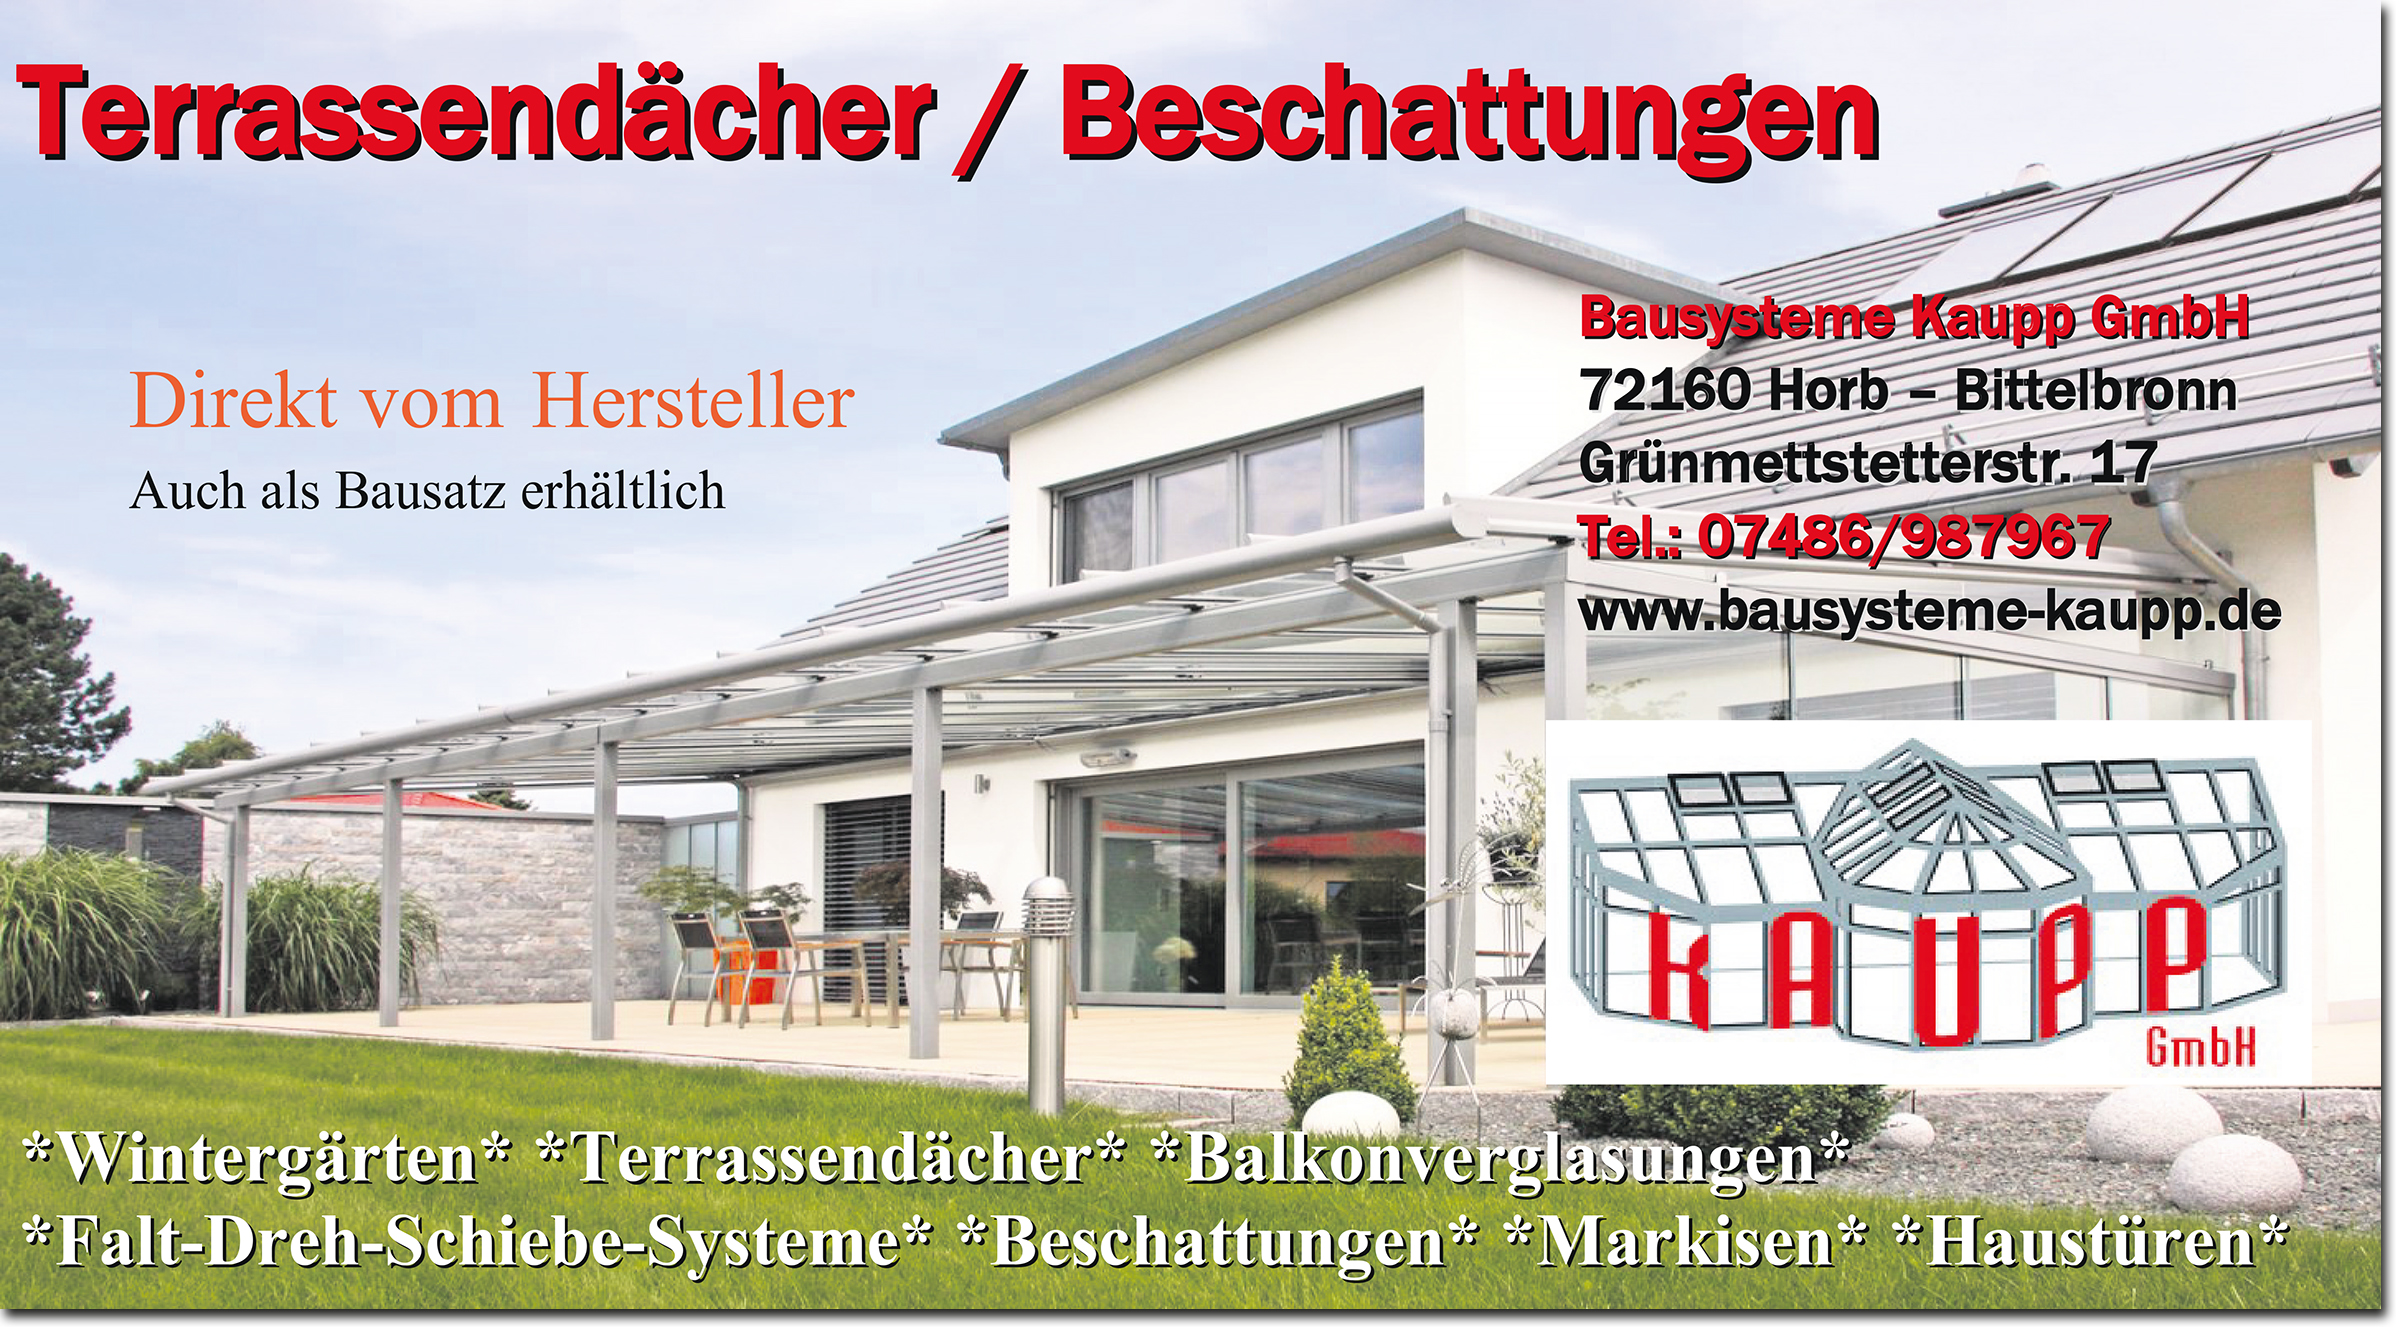 Bausysteme Kaupp GmbH